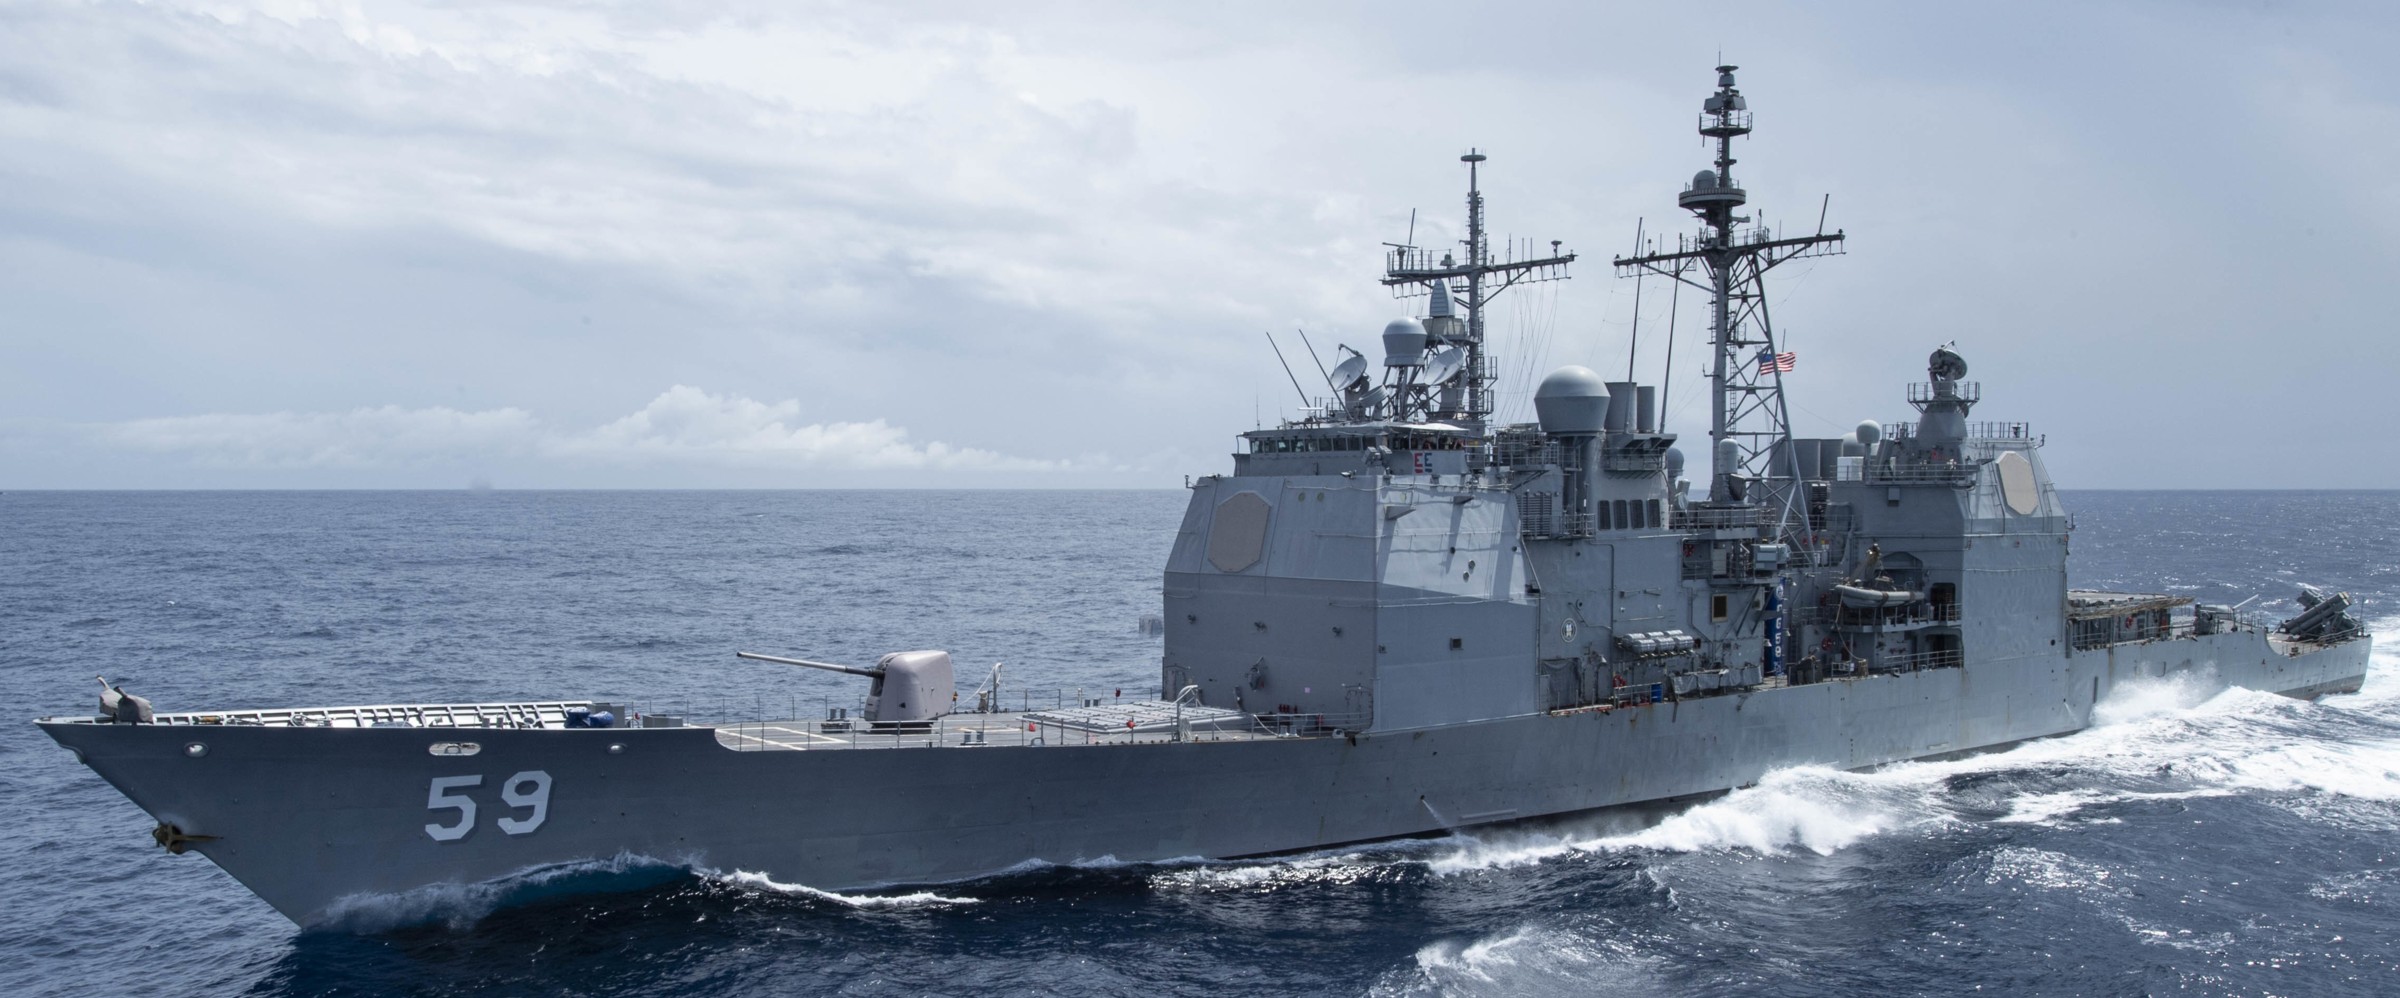 cg-59 uss princeton ticonderoga class guided missile cruiser aegis us navy indian ocean 97